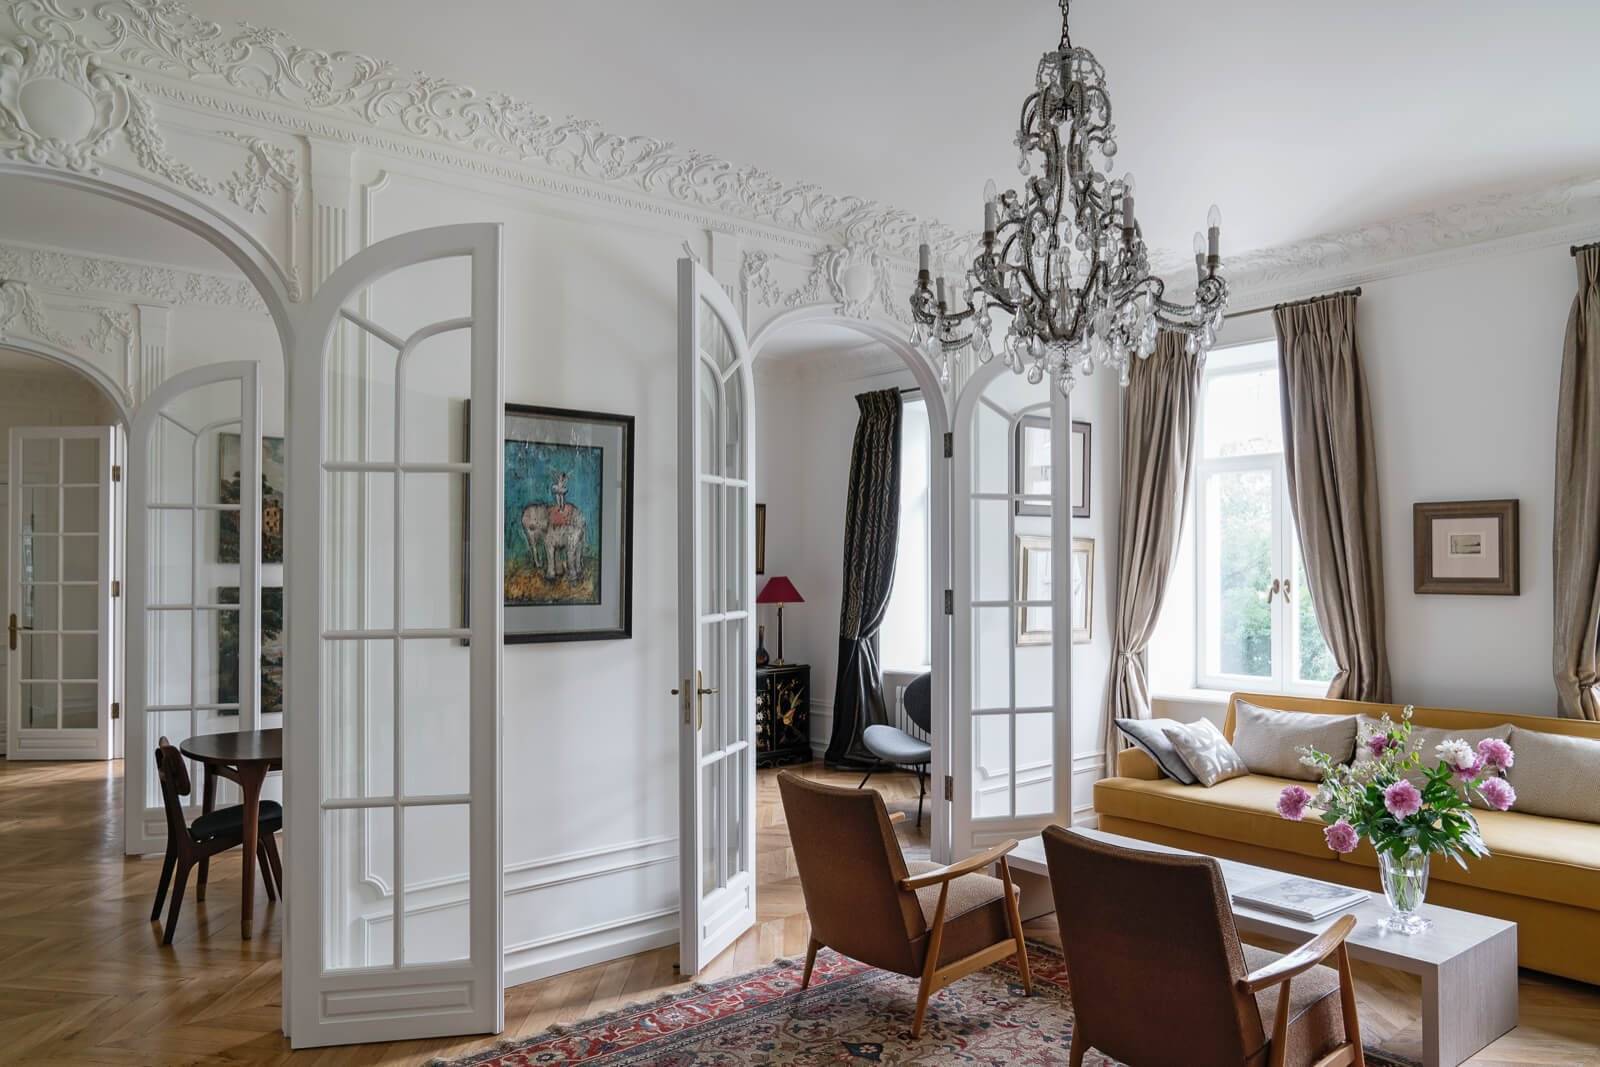 Стильная парижская квартира интерьер от leainvent, франция
стильная парижская квартира интерьер от leainvent, франция